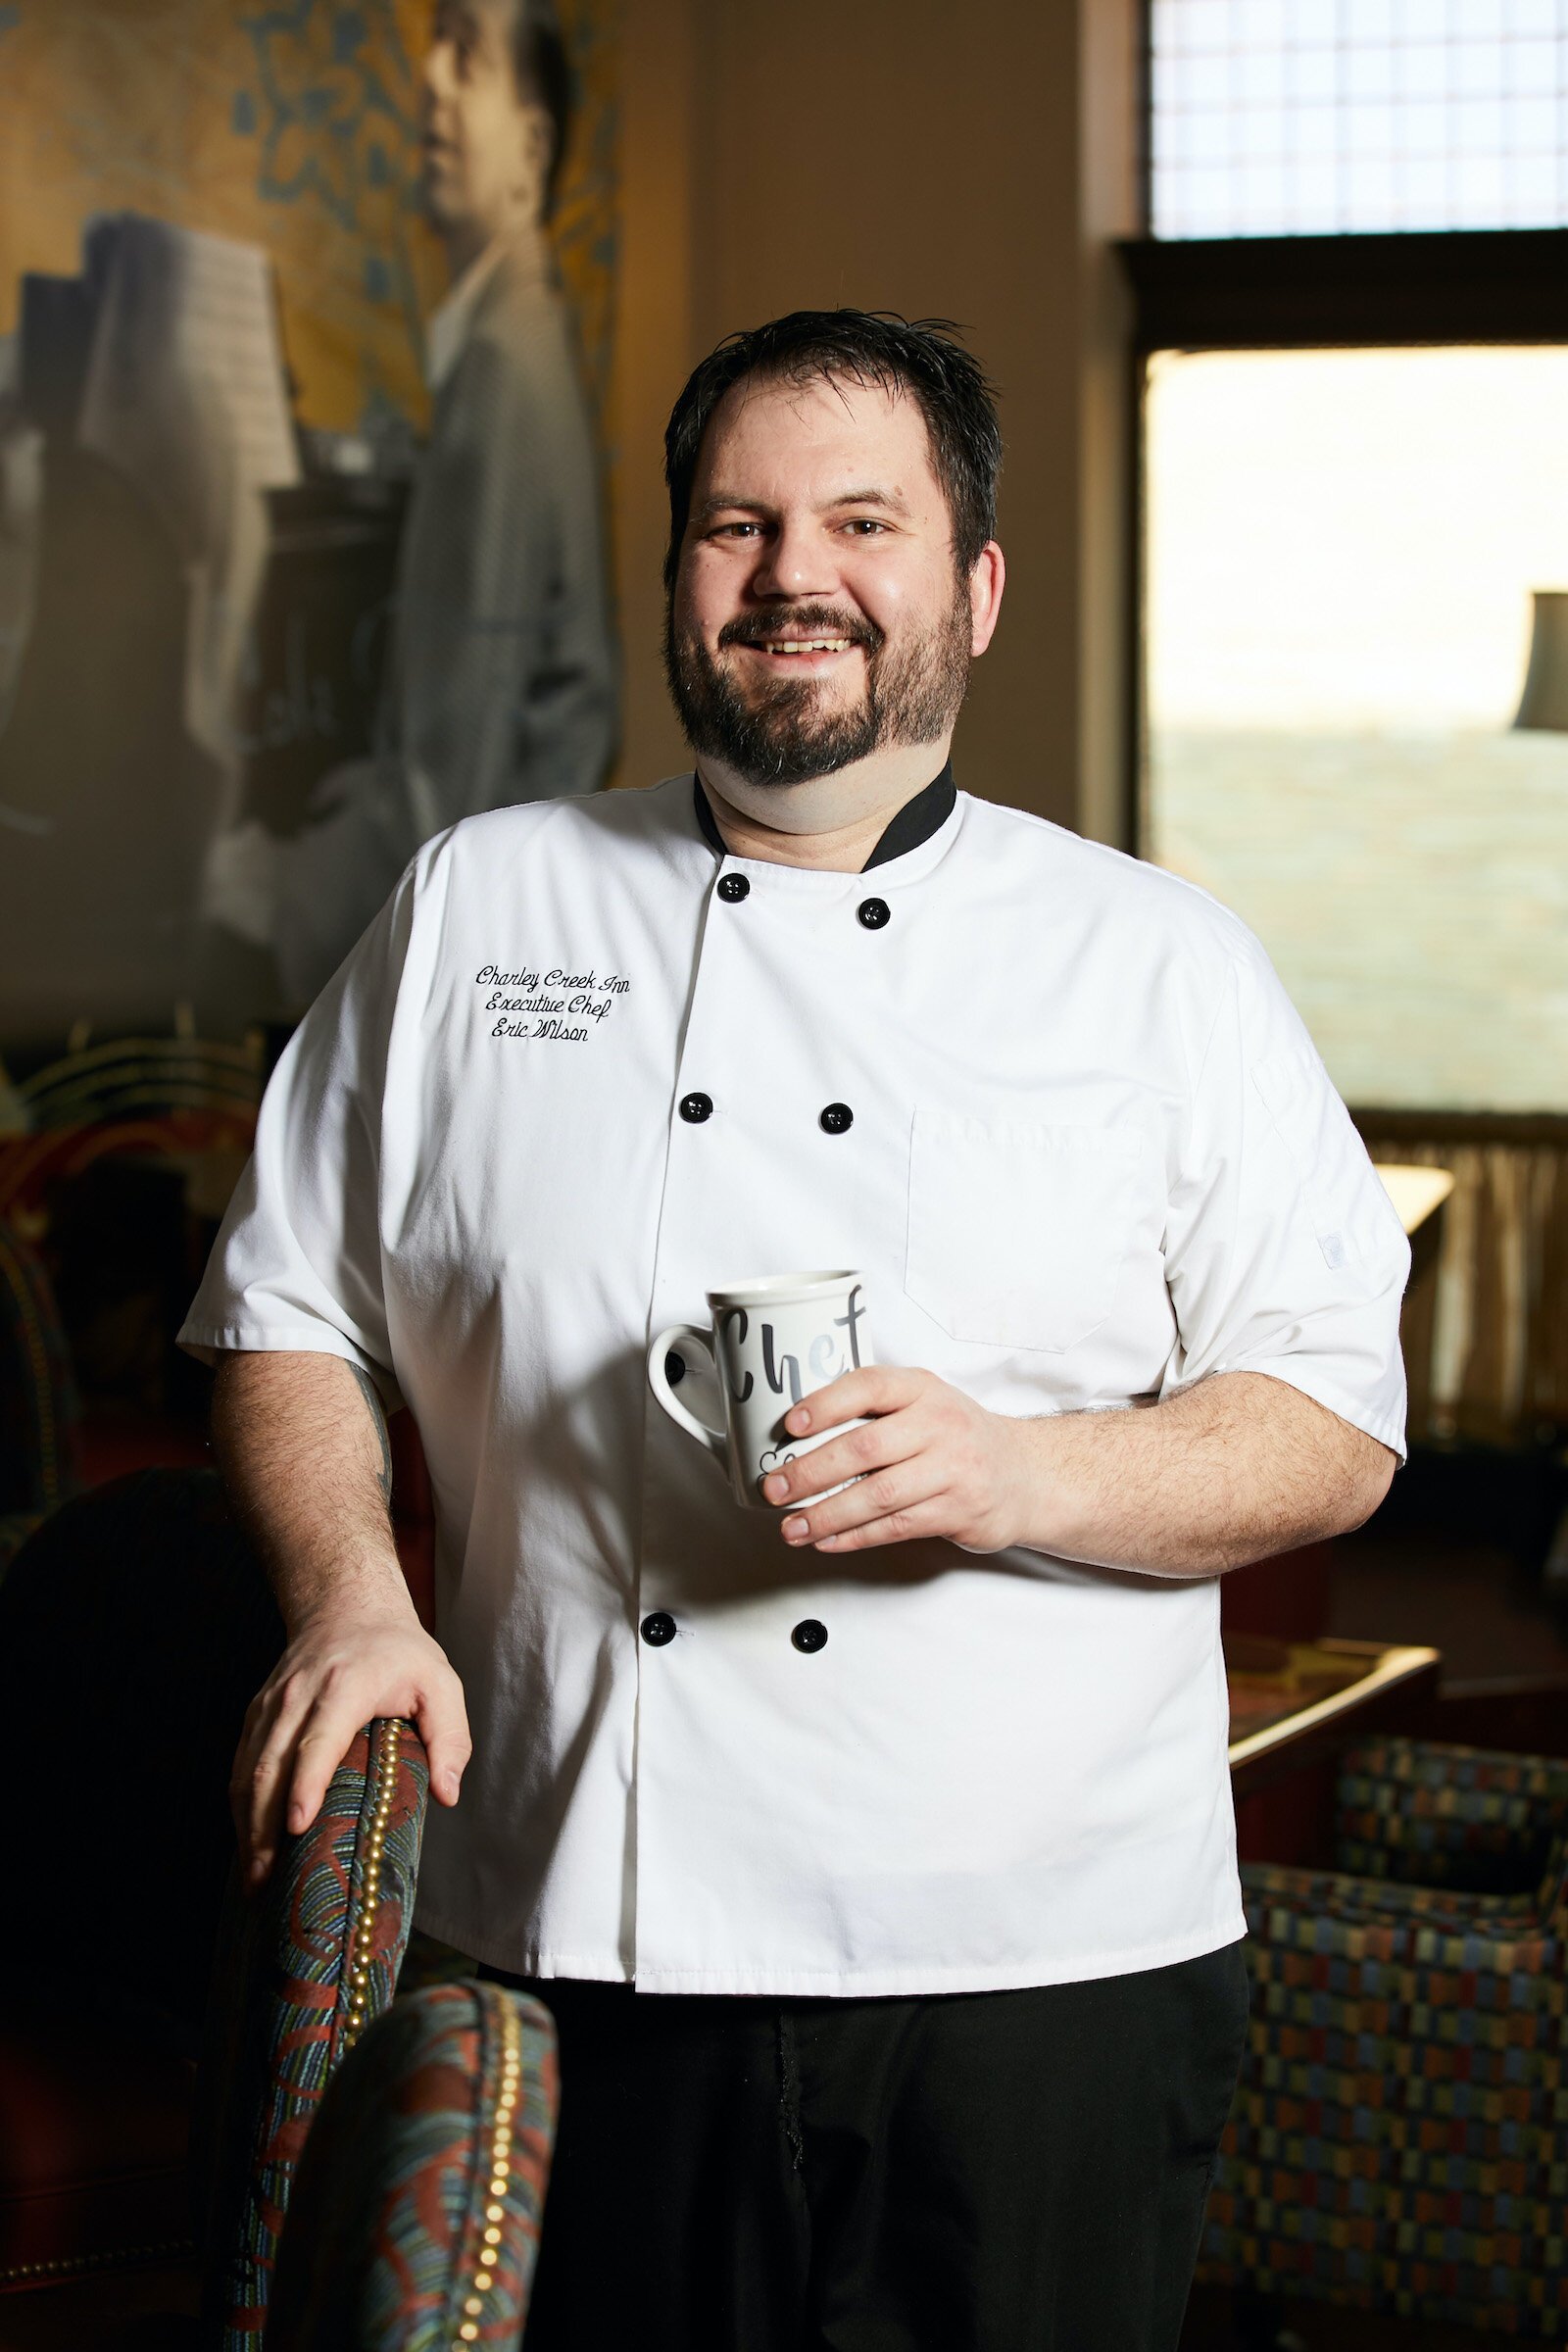 Eric Wilson, Executive Chef for Twenty at the Charley Creek Inn